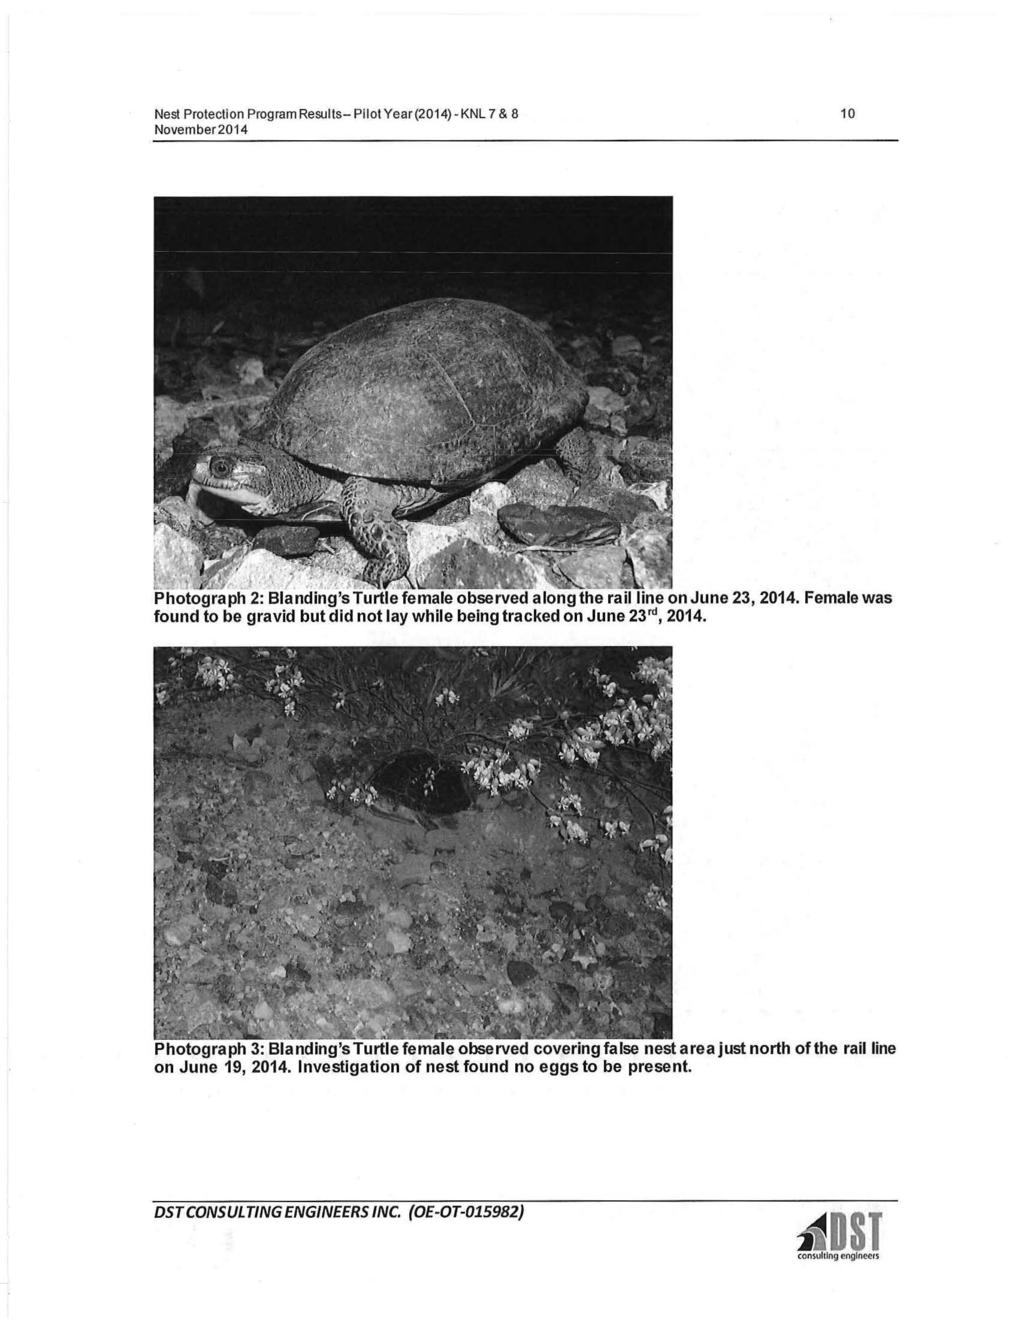 Nest Protecti on Program Results- Pilot Year(2014)-KNL 7 & 8 10 Photograph 3: Blanding'sTurtlefemaleobserved covering false nestareajustnorth